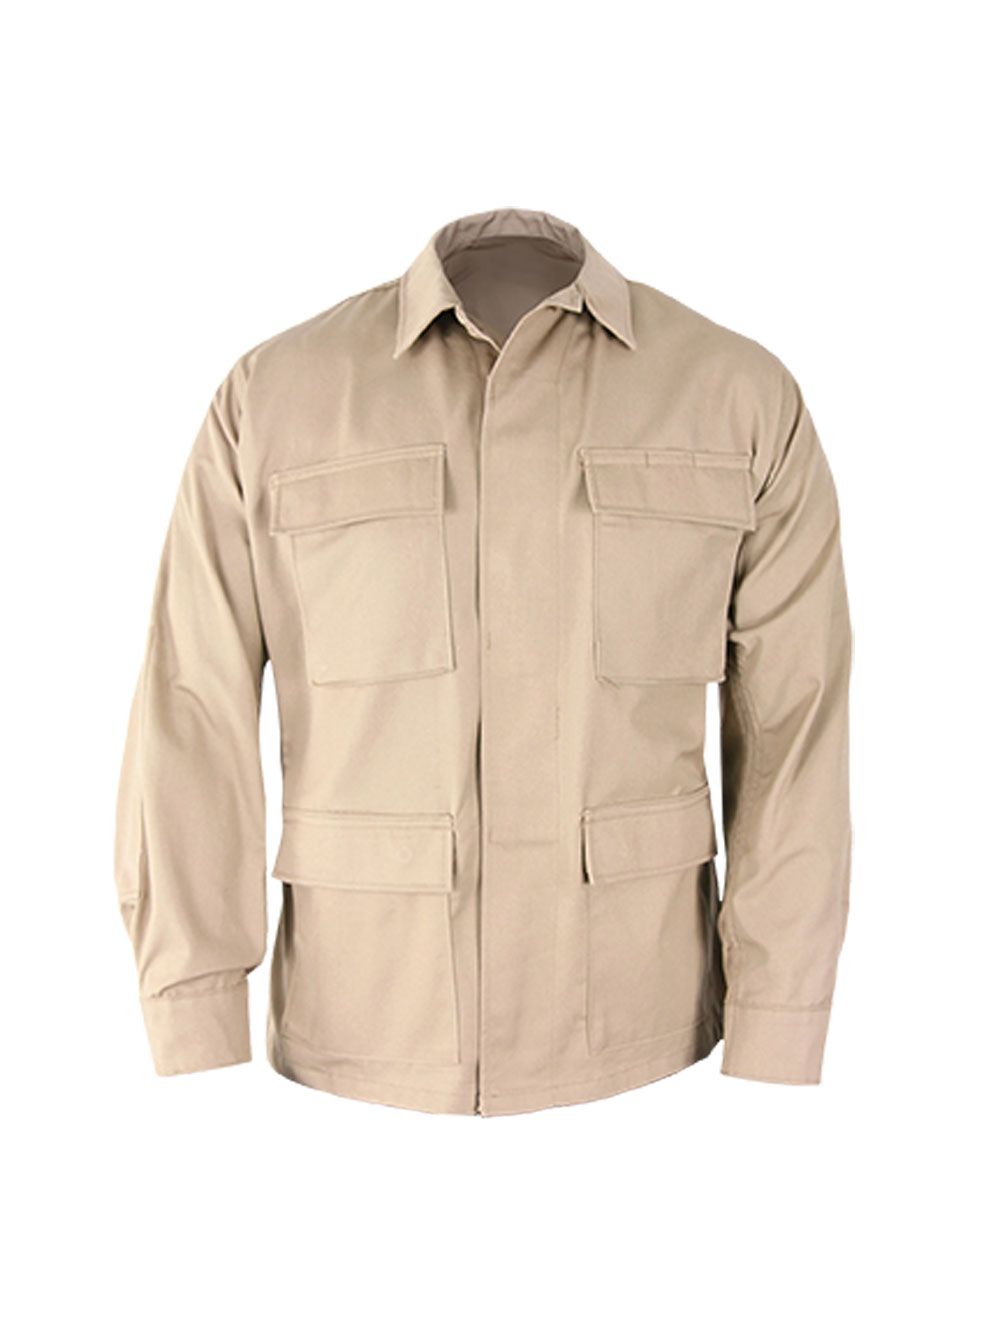 Propper F5450-25 Uniform BDU Coat - Cotton/Poly Ripstop